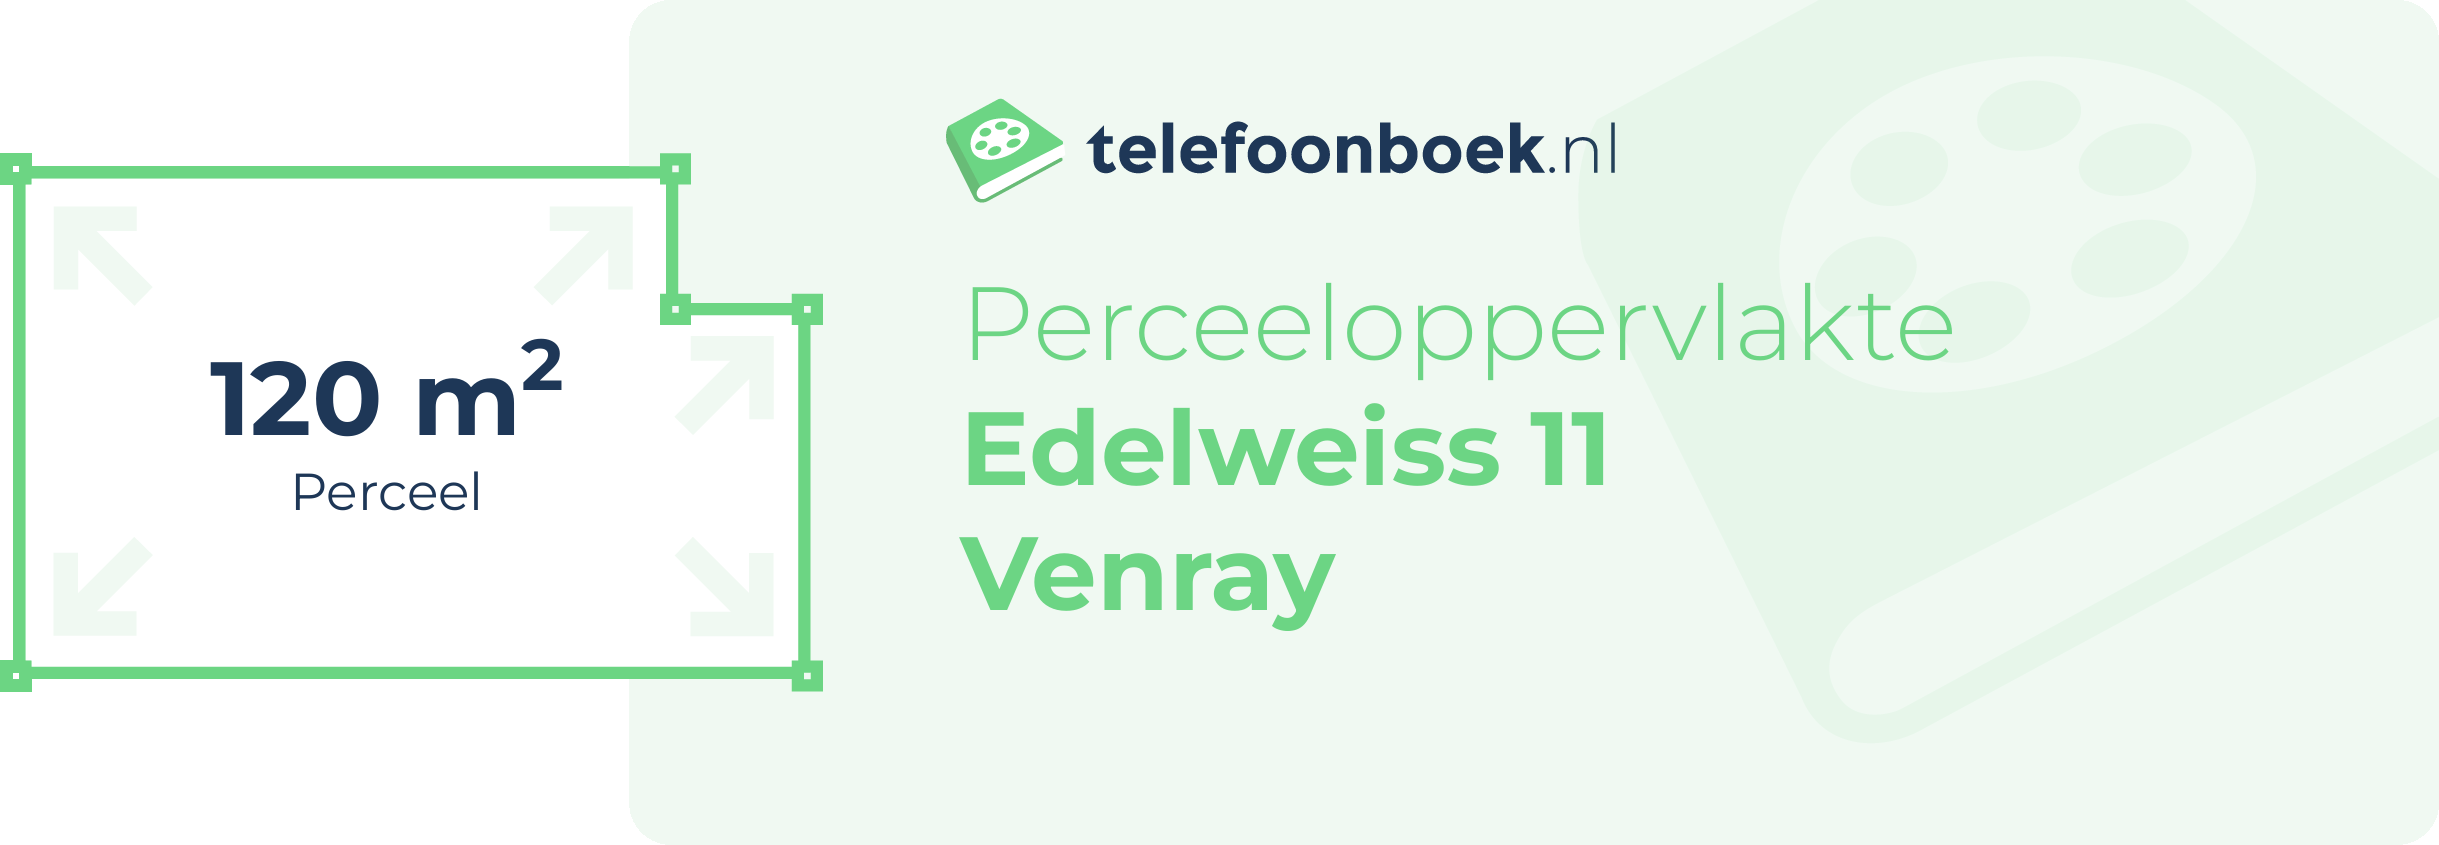 Perceeloppervlakte Edelweiss 11 Venray